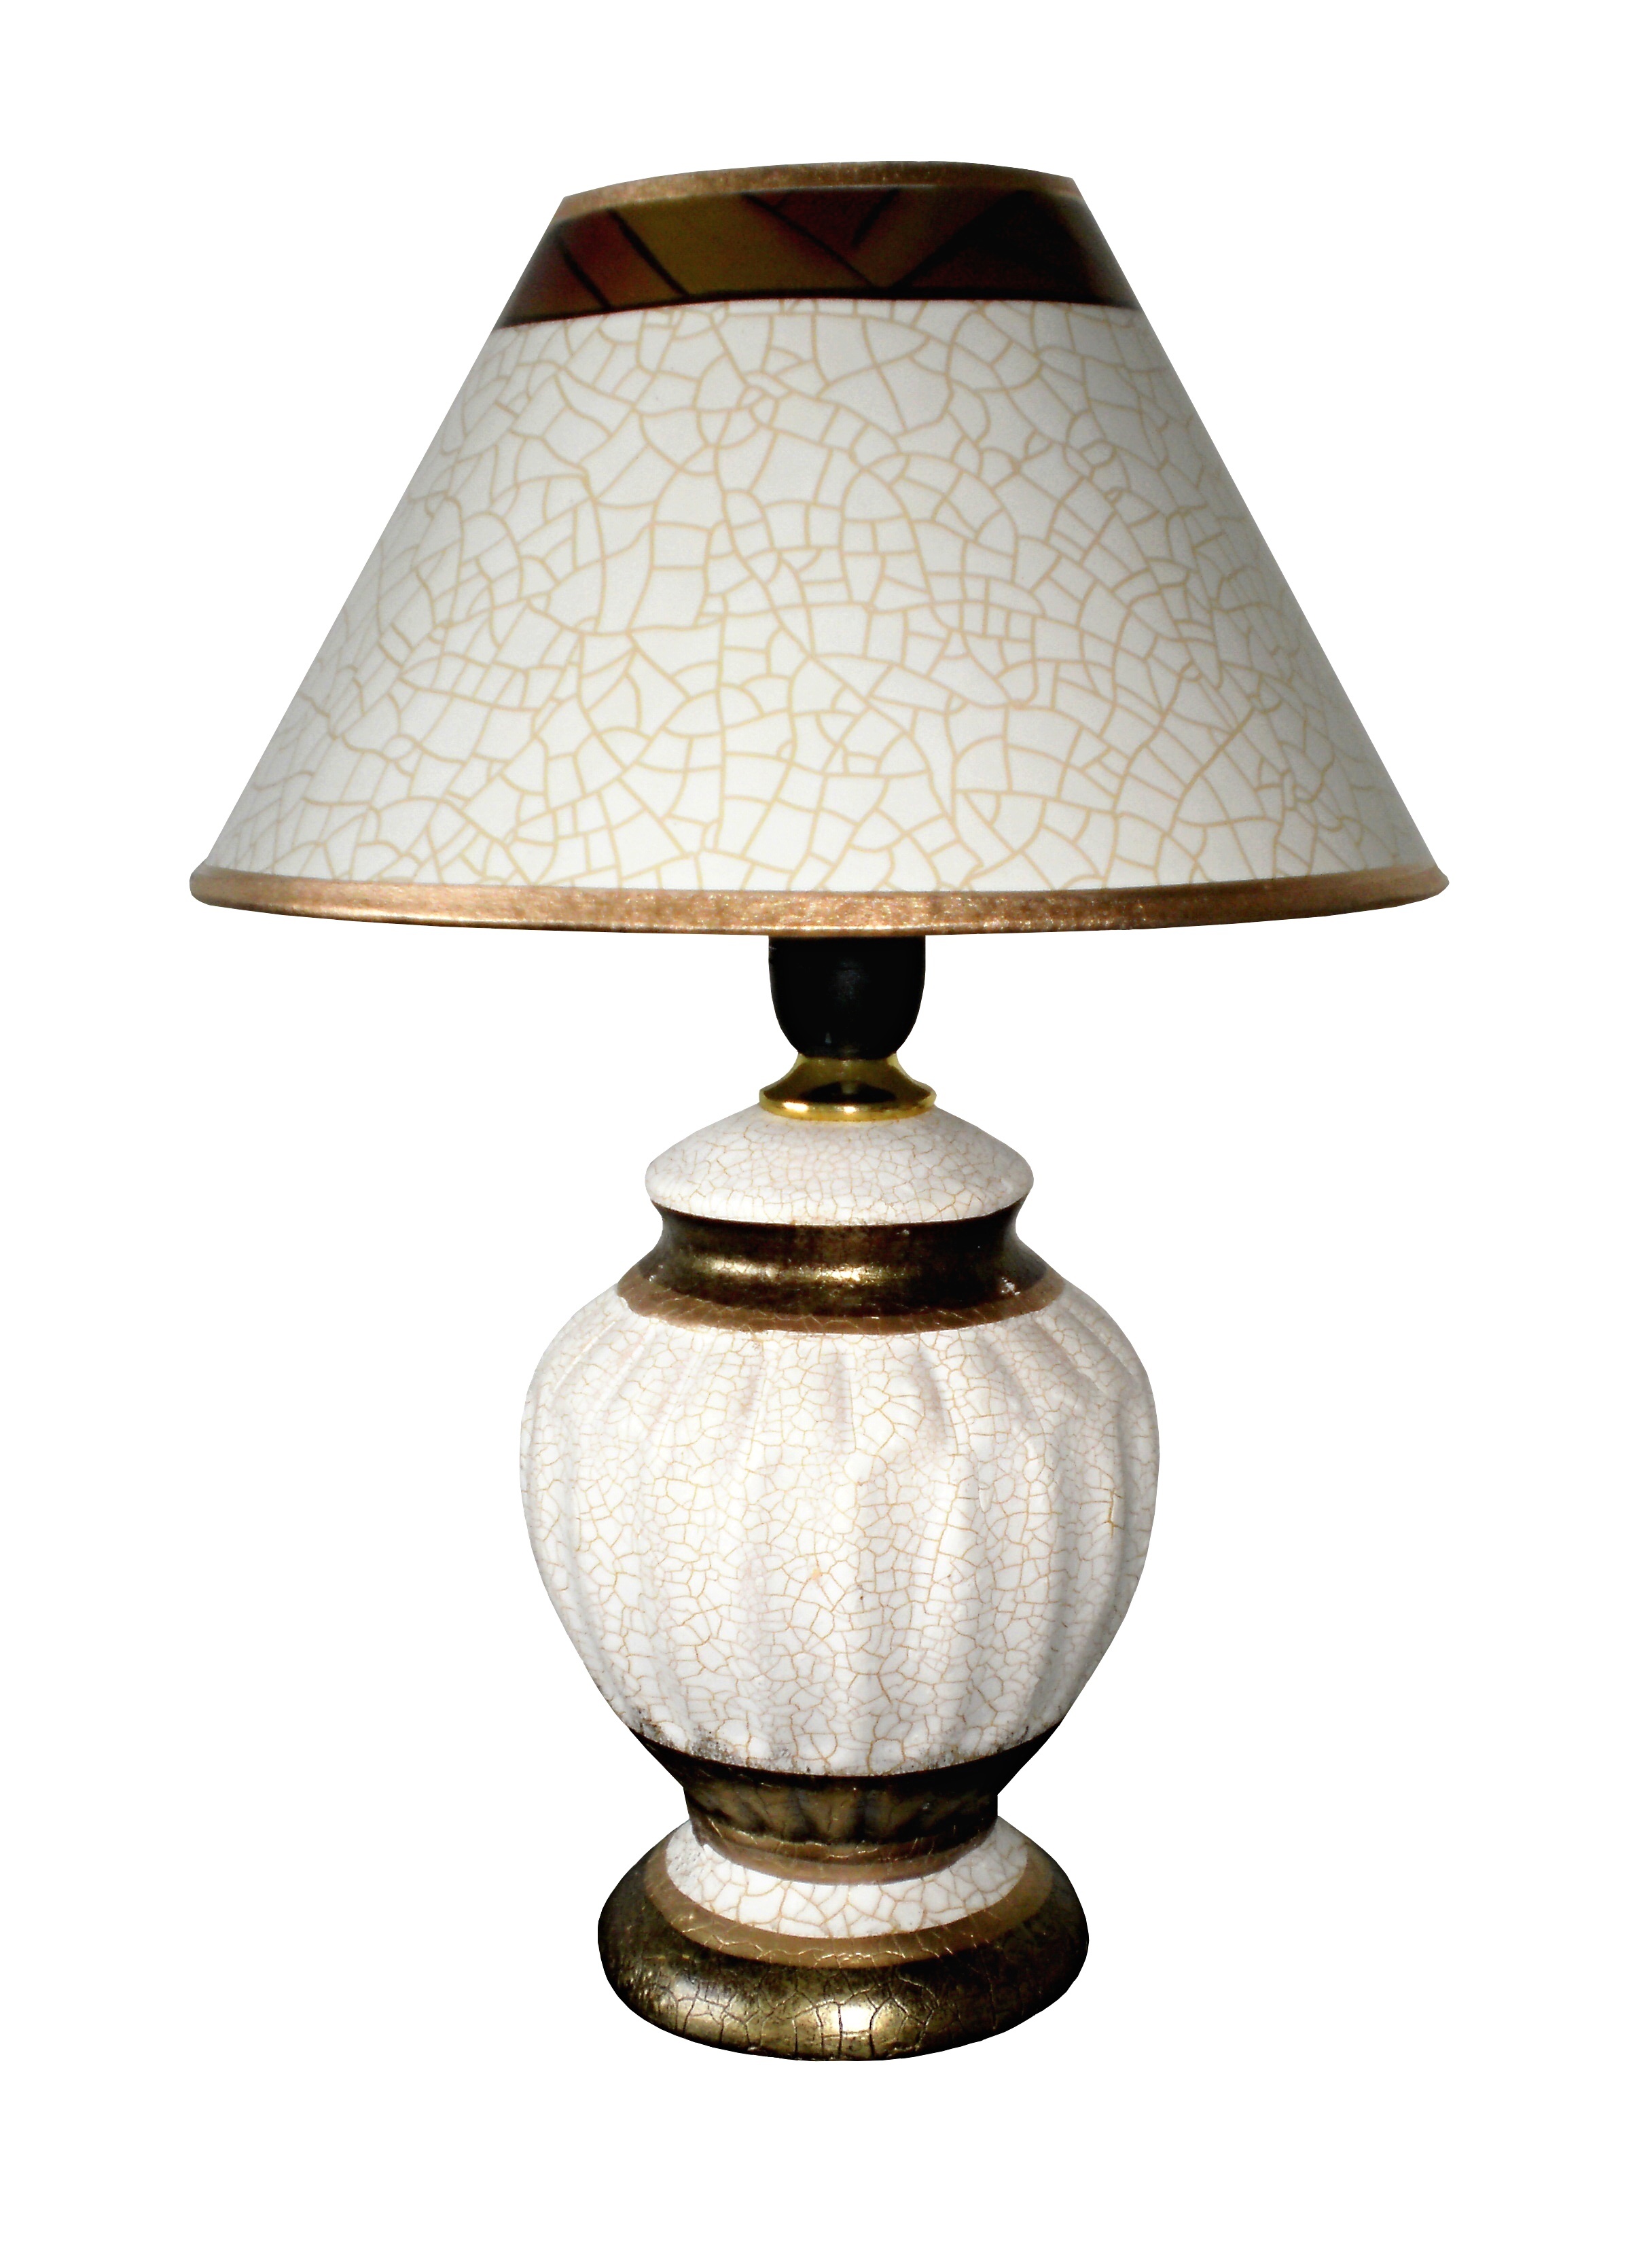 File:White lamp.JPG - Wikimedia Commons